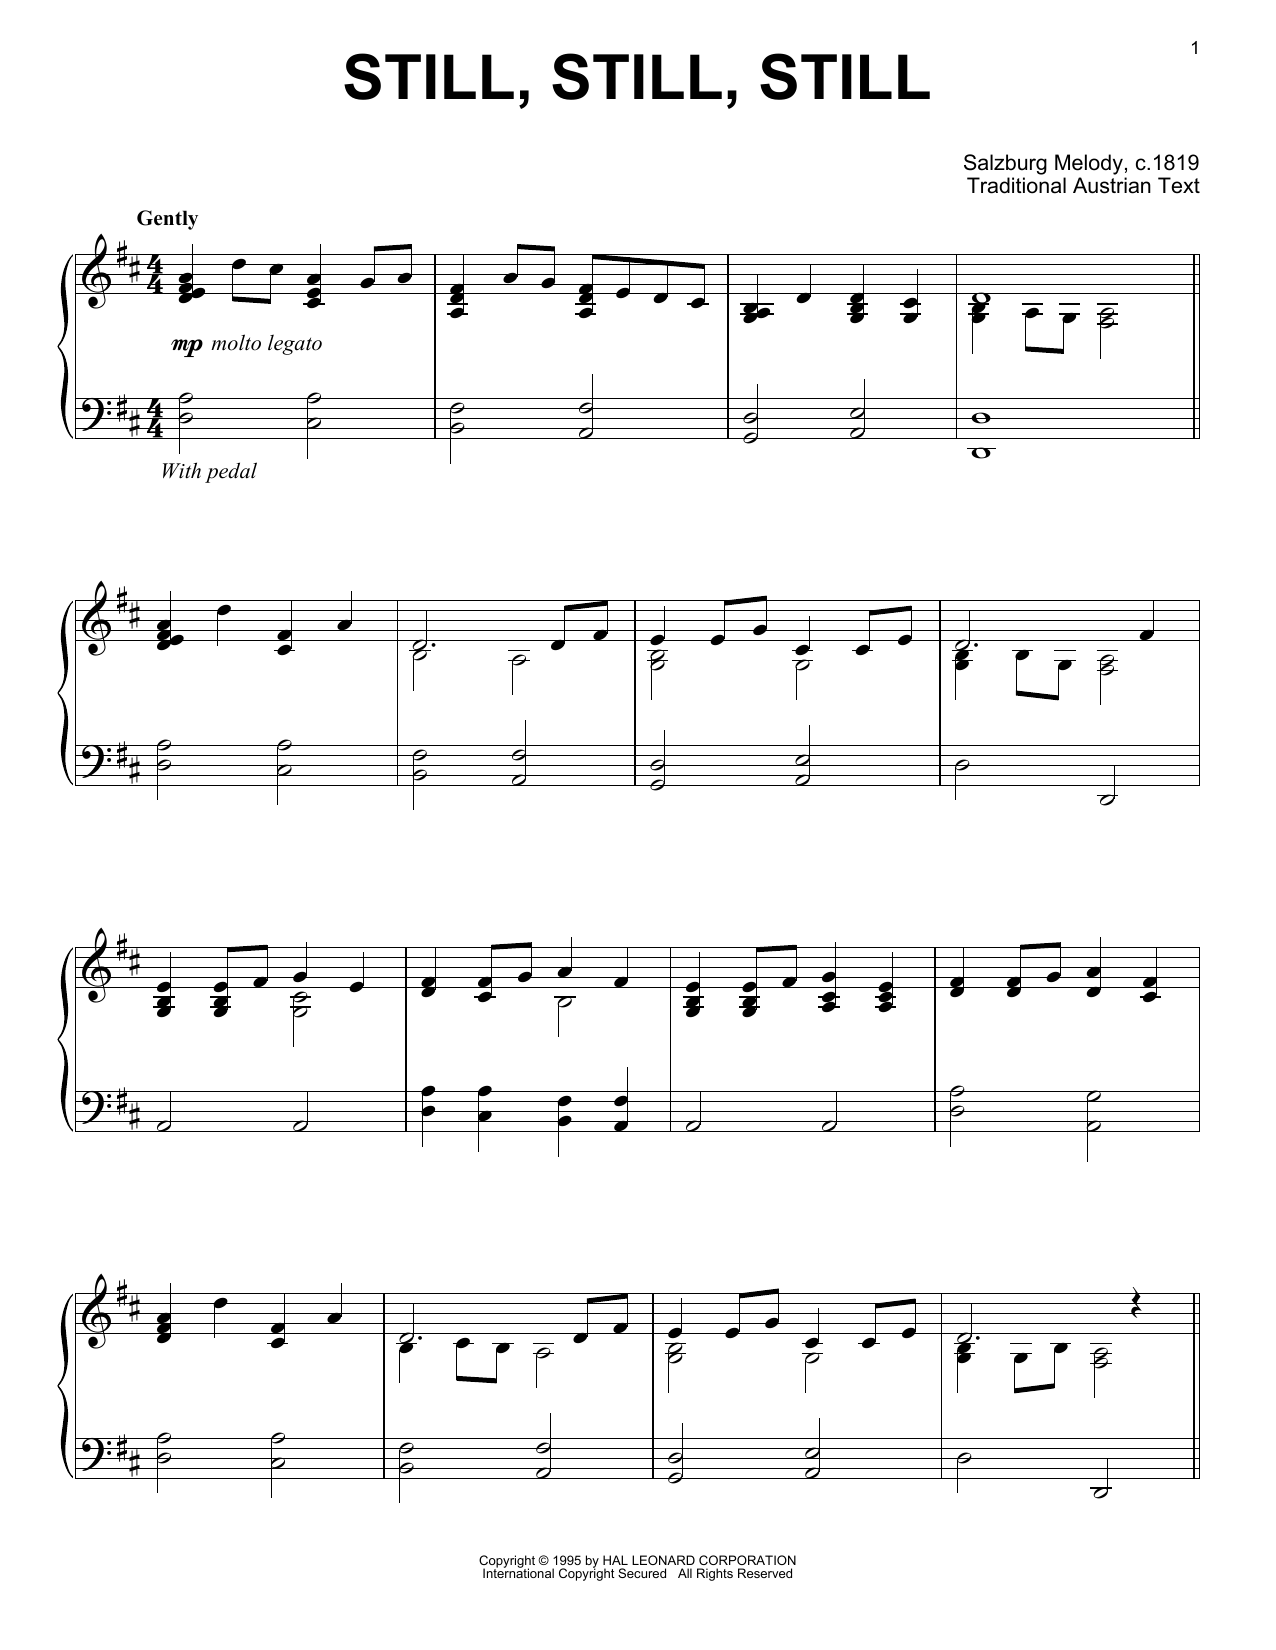 Traditional Austrian Text Still, Still, Still sheet music notes and chords arranged for Trombone Solo